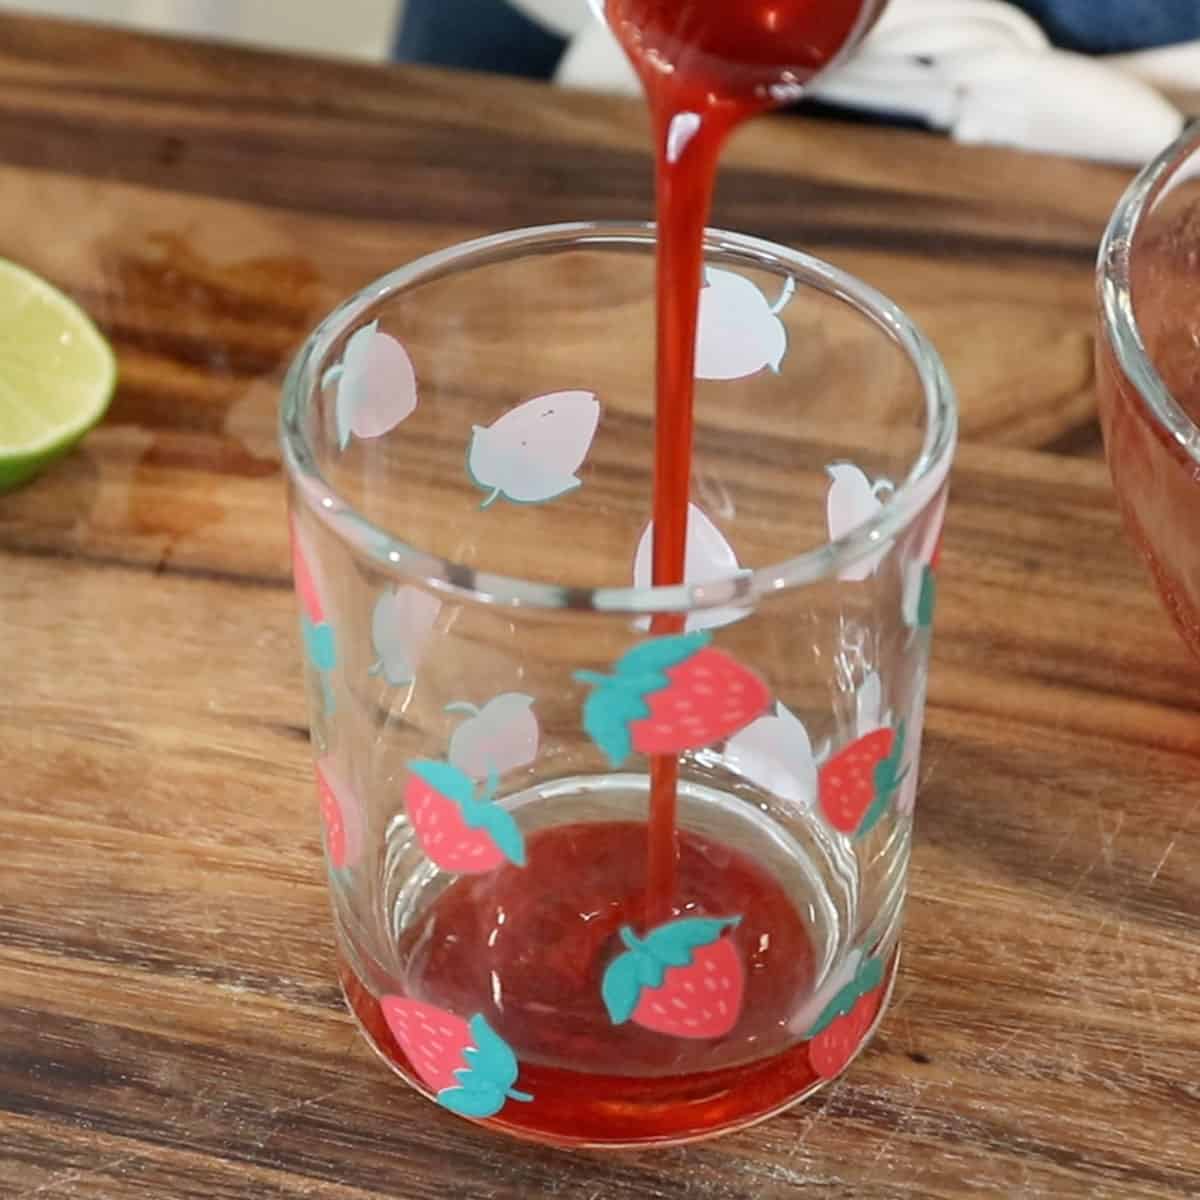 making Strawberry Mojito Mocktail